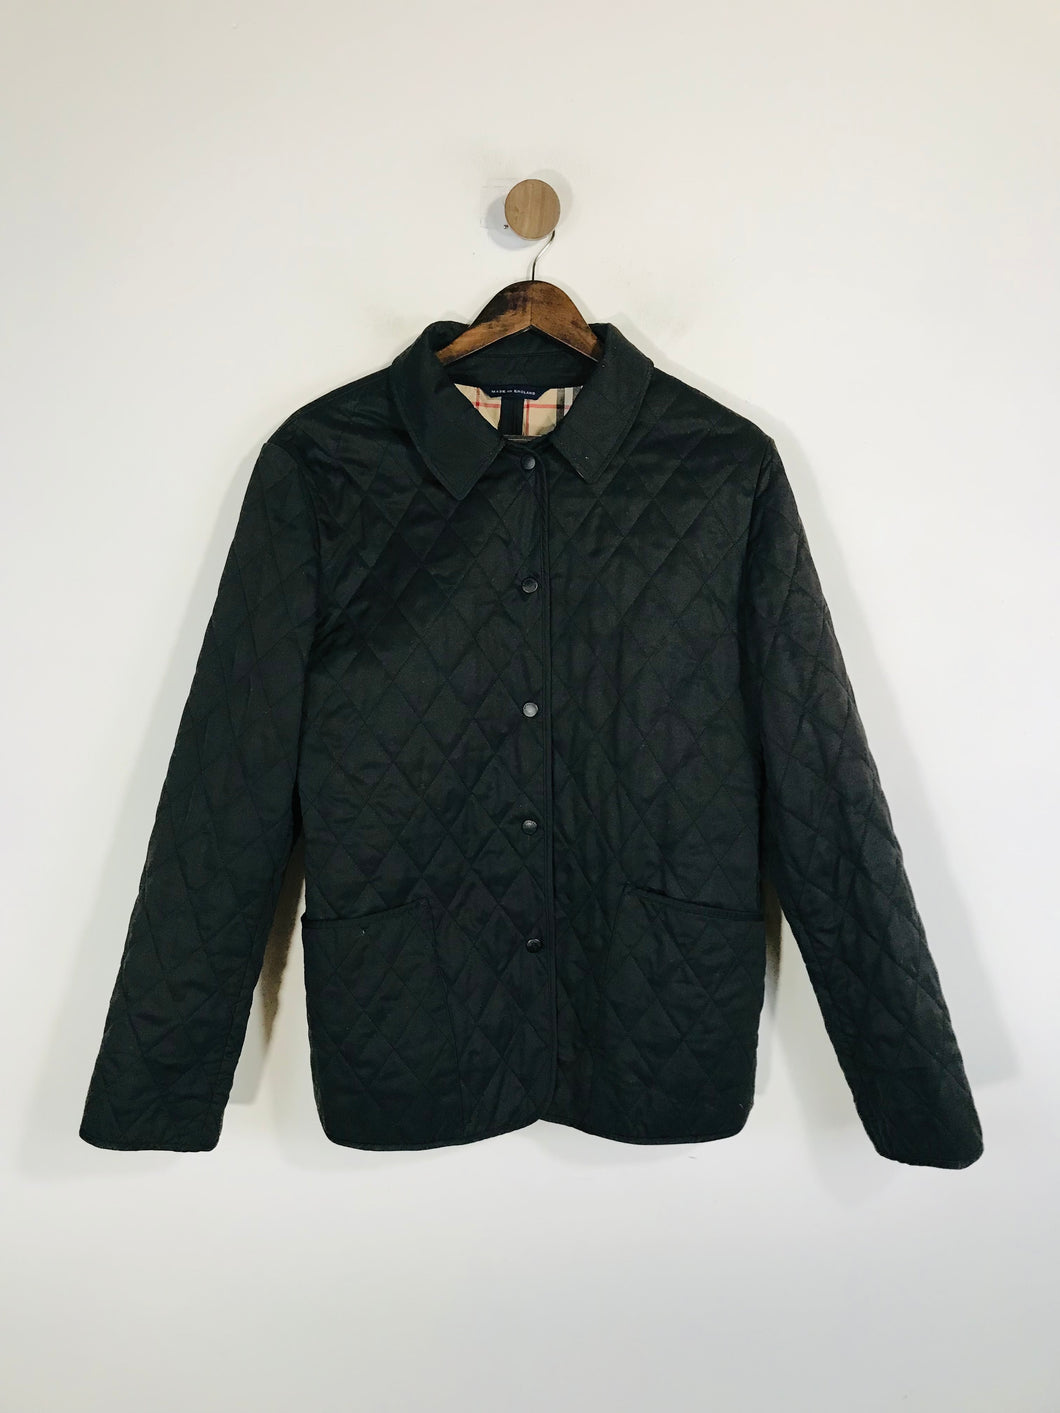 Burberry Men's Quilted Blazer Jacket | L | Black